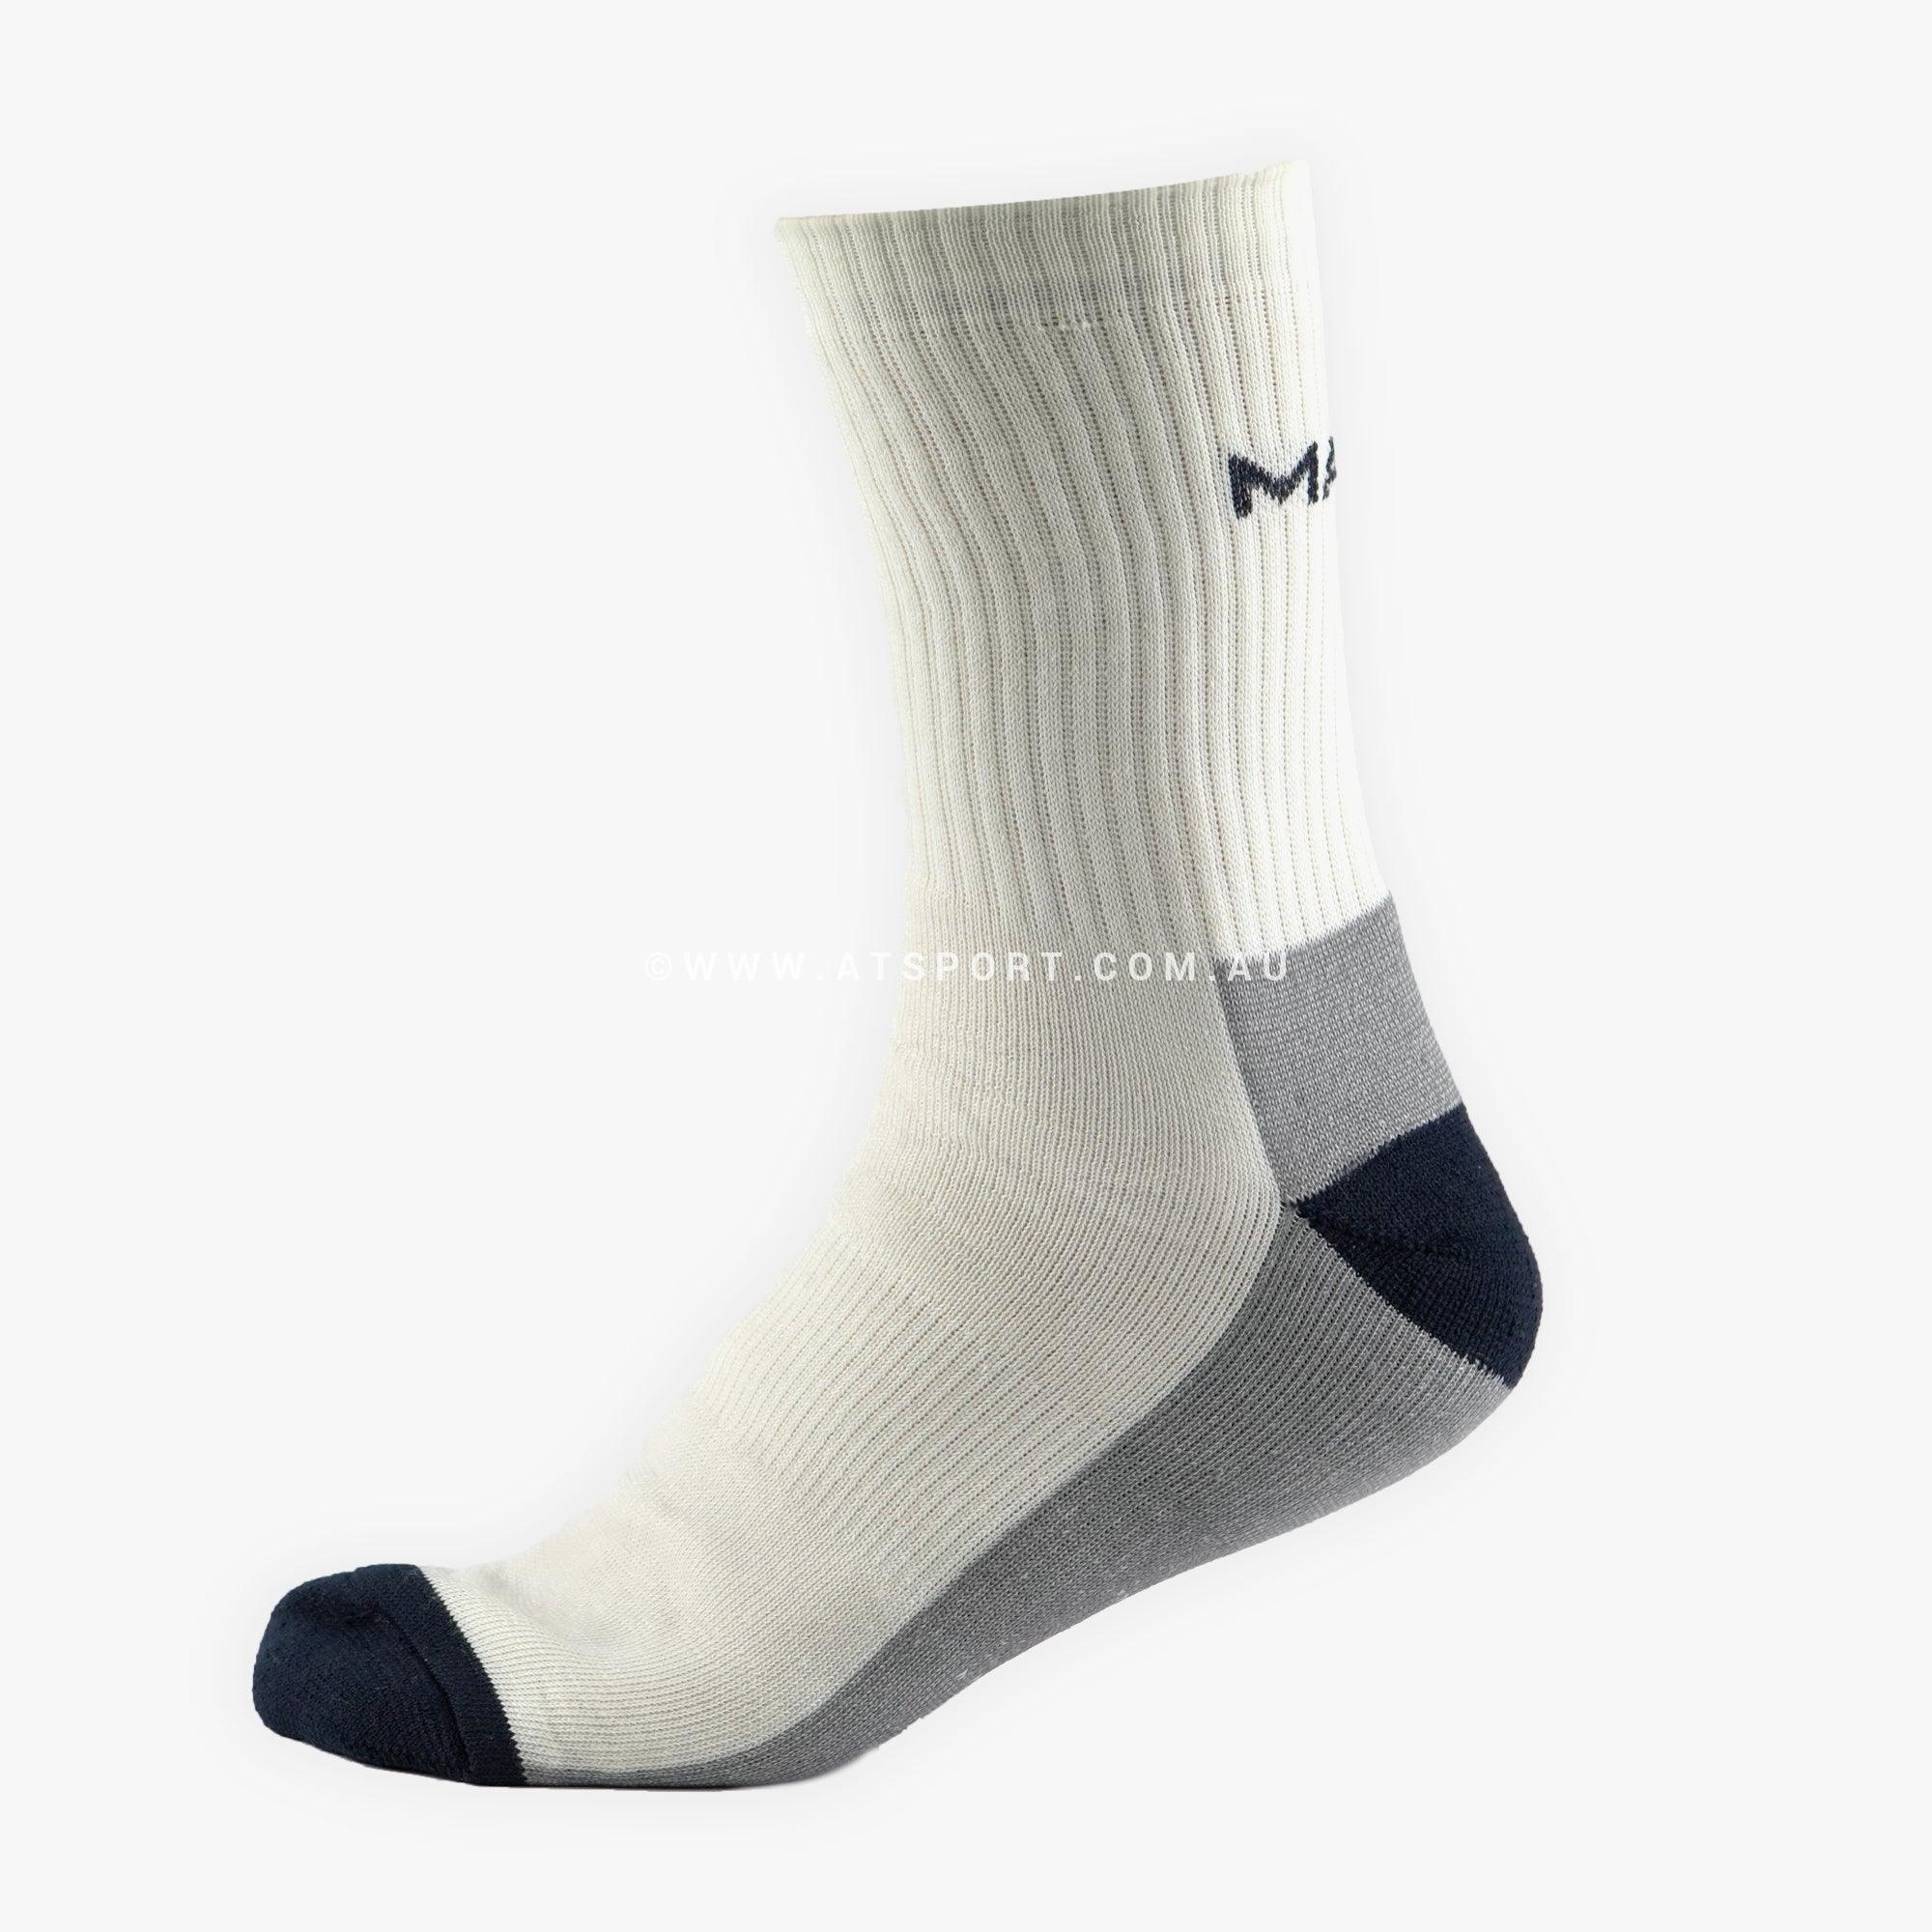 Masuri Pro Wool Cricket Socks - AT Sports